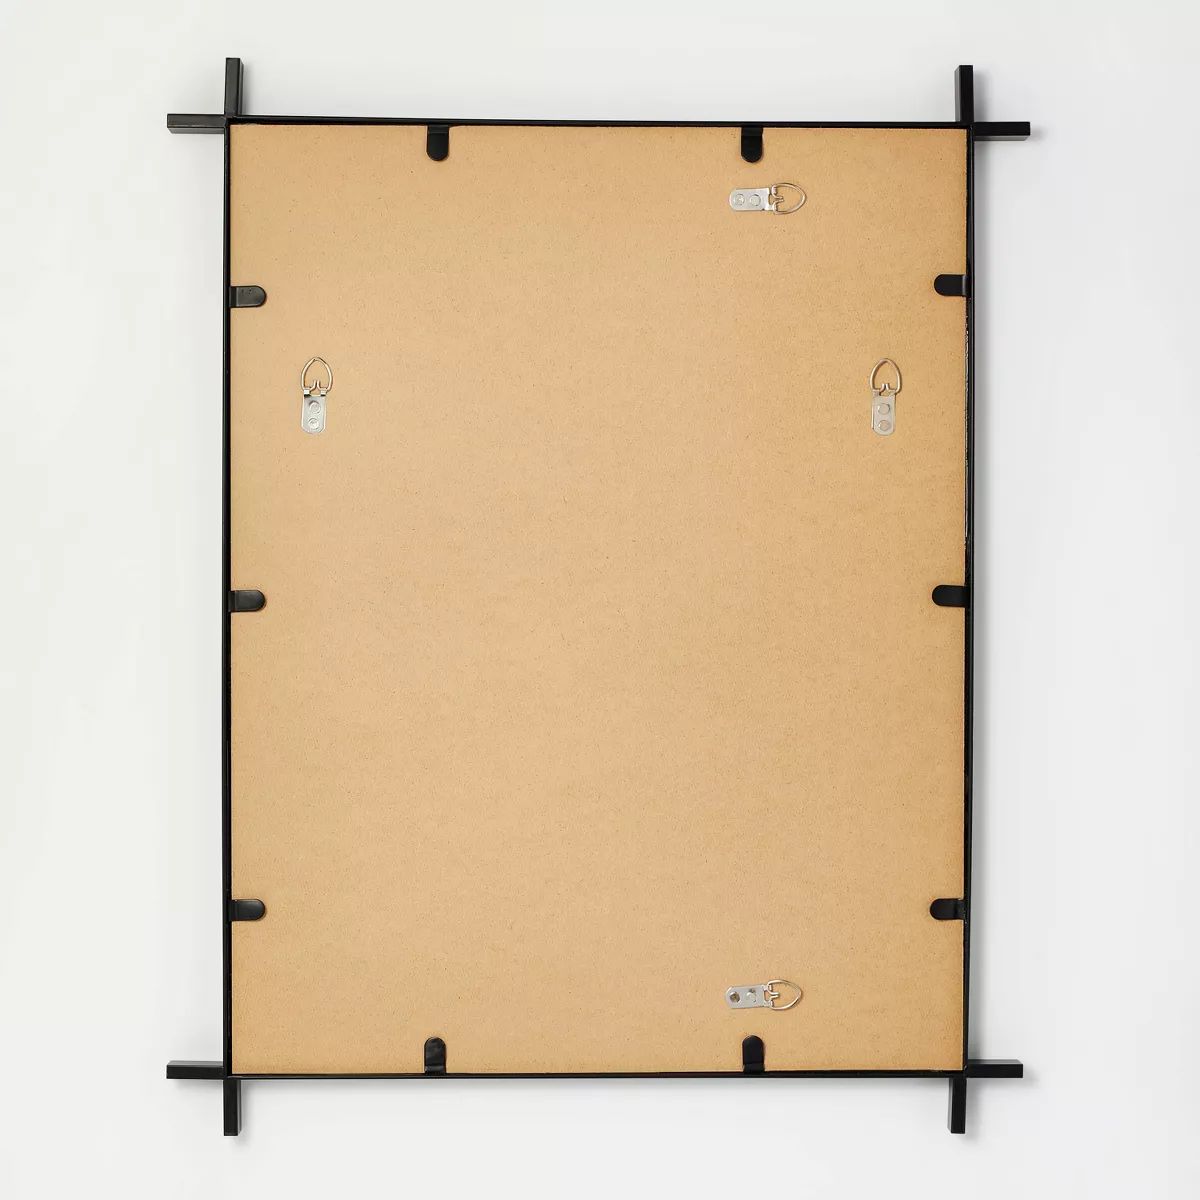 24" x 30" Cross Corner Metal Wall Mirror Black - Threshold™ designed with Studio McGee | Target